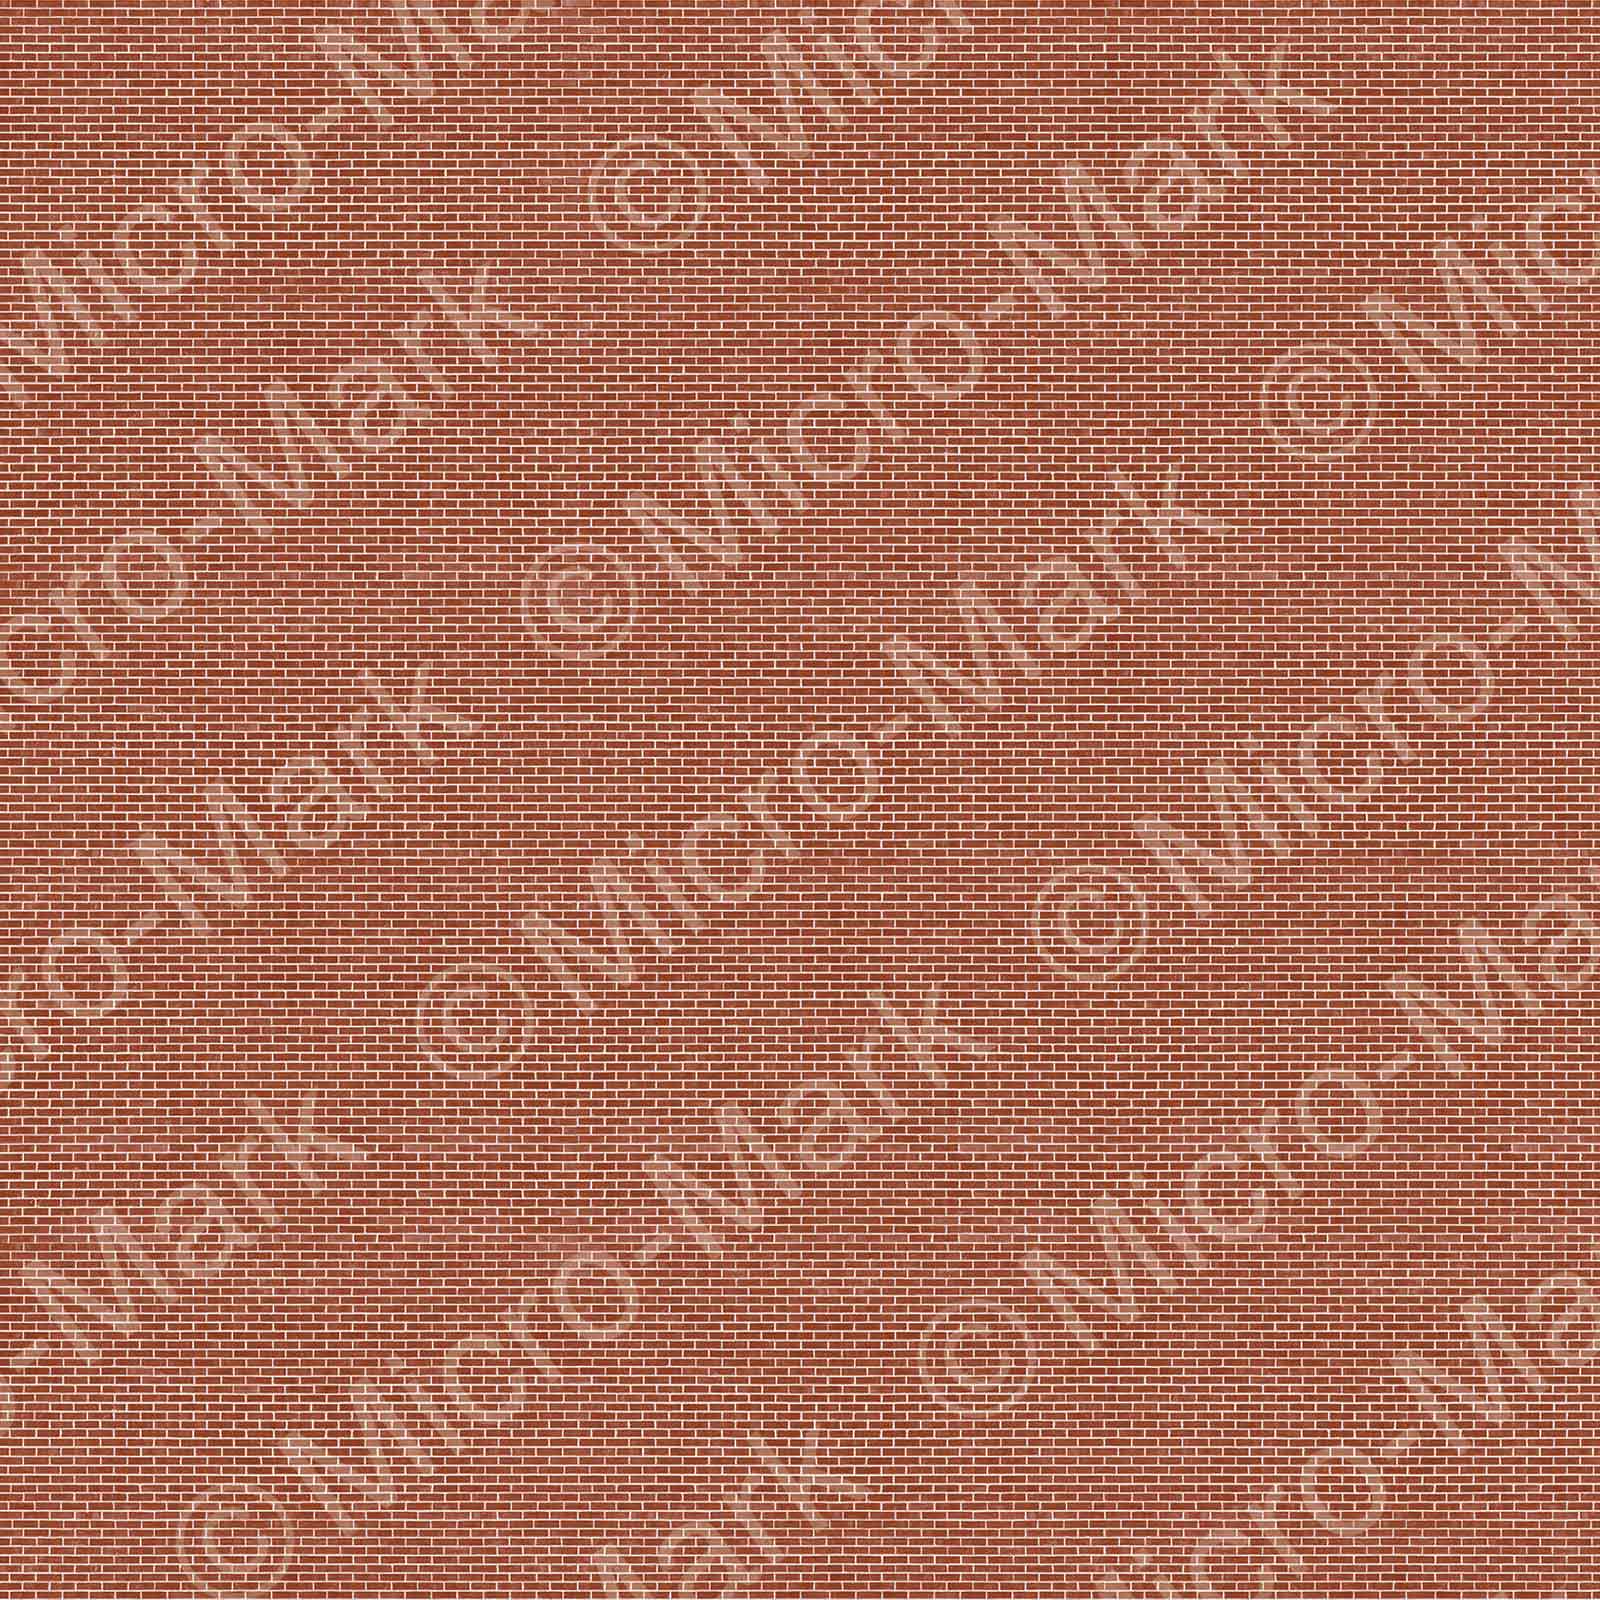 Micro - Mark Aged Factory Brick, HO Scale - 4pk - Micro - Mark Arts & Crafts